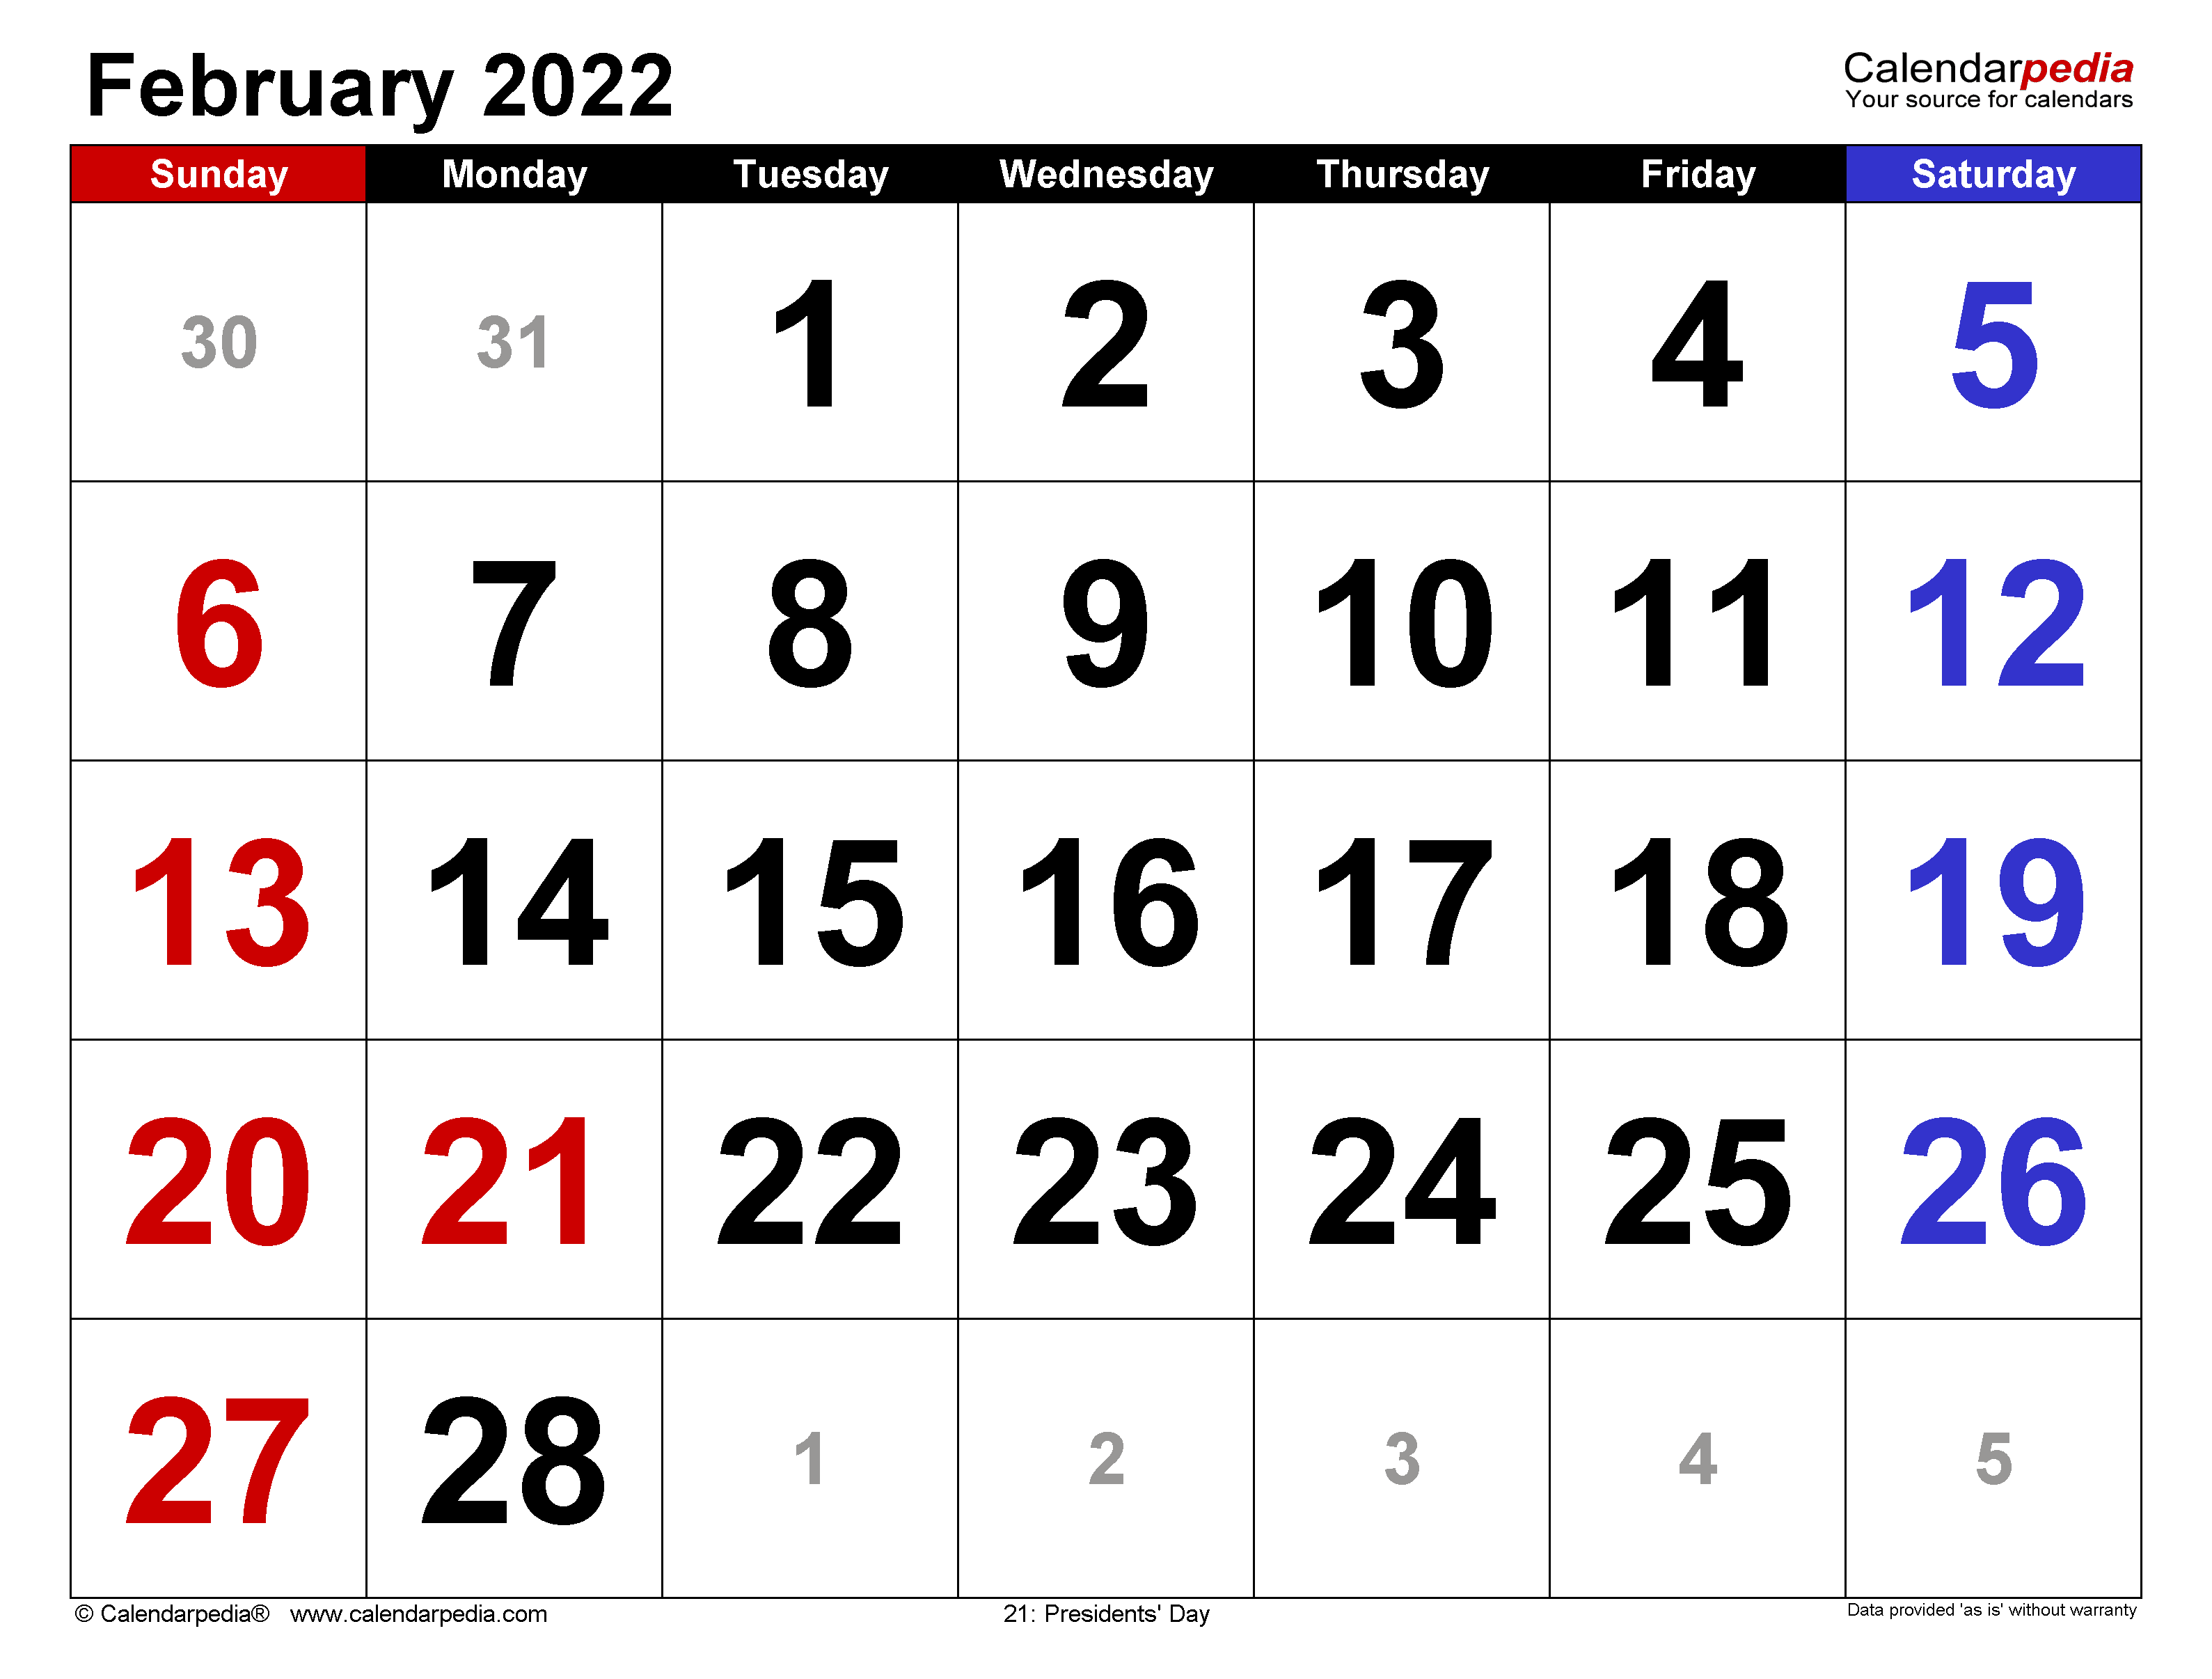 February 2022 Calendar Wallpapers - Top Free February 2022 Calendar ...